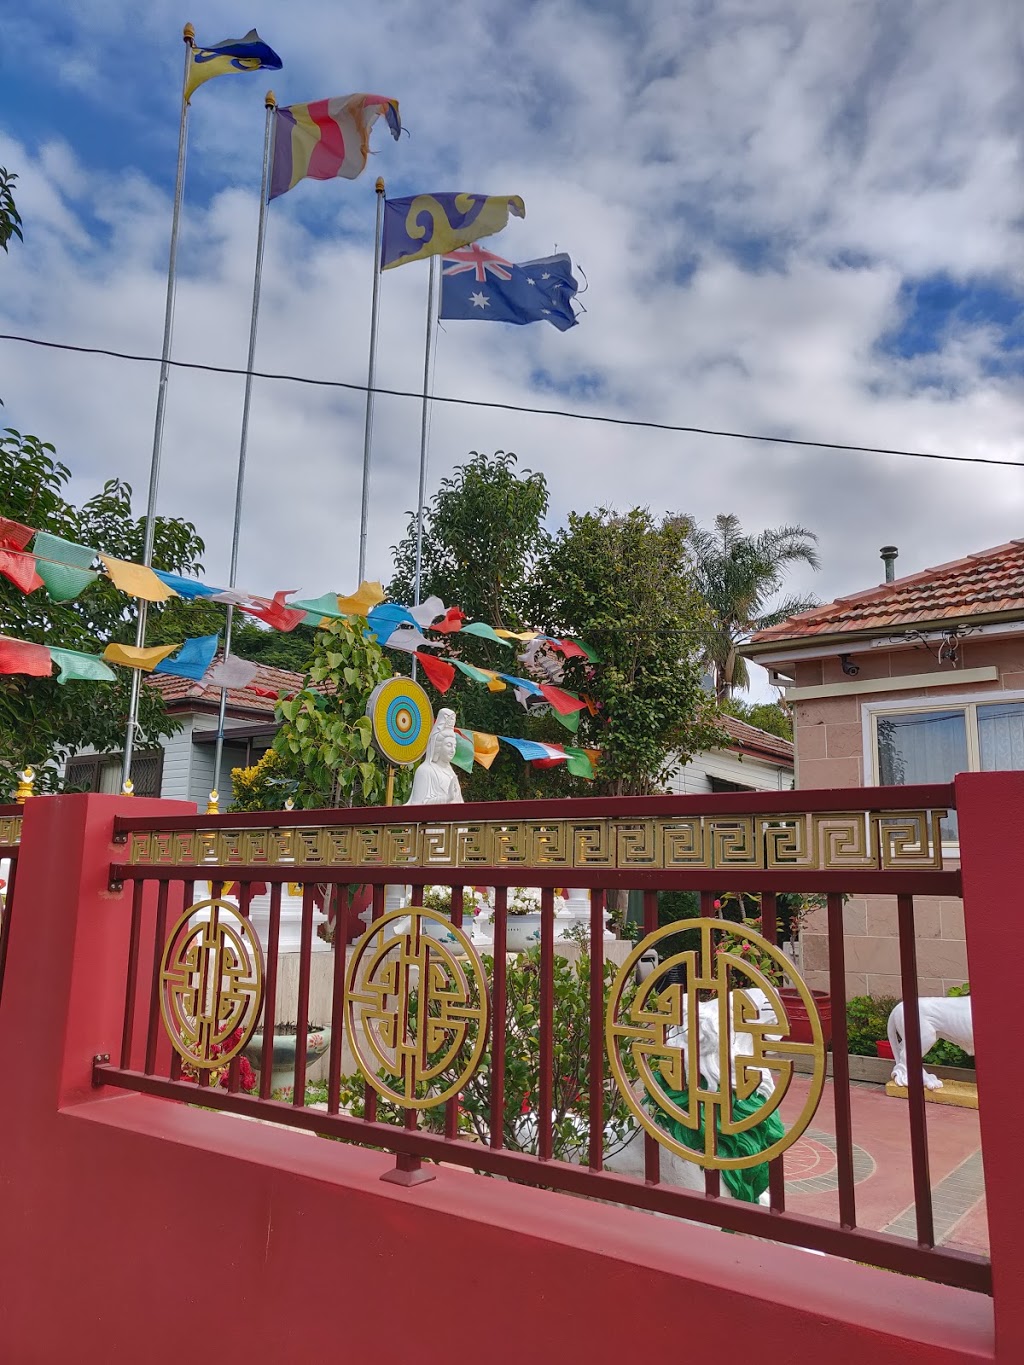 Barom Kagyu Chodak Drupju Chuling | place of worship | 50B Woods Rd, Sefton NSW 2162, Australia | 0297865513 OR +61 2 9786 5513